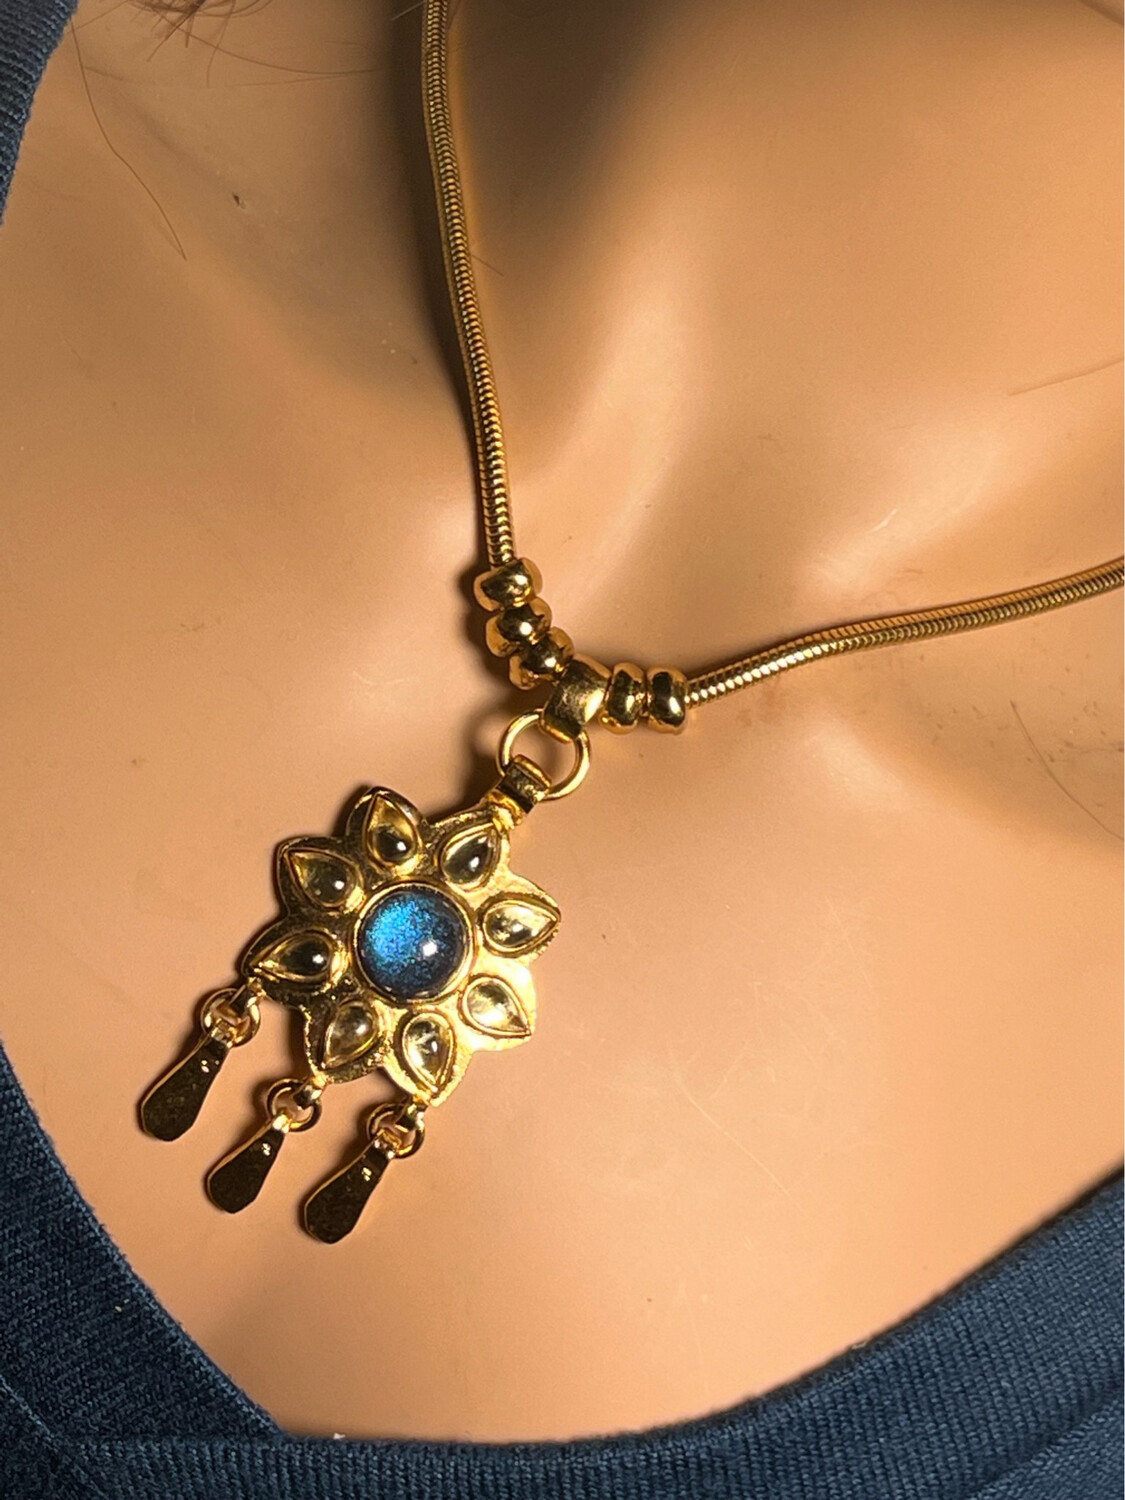 Vintage Yves Saint Laurent necklace with Flower pendant